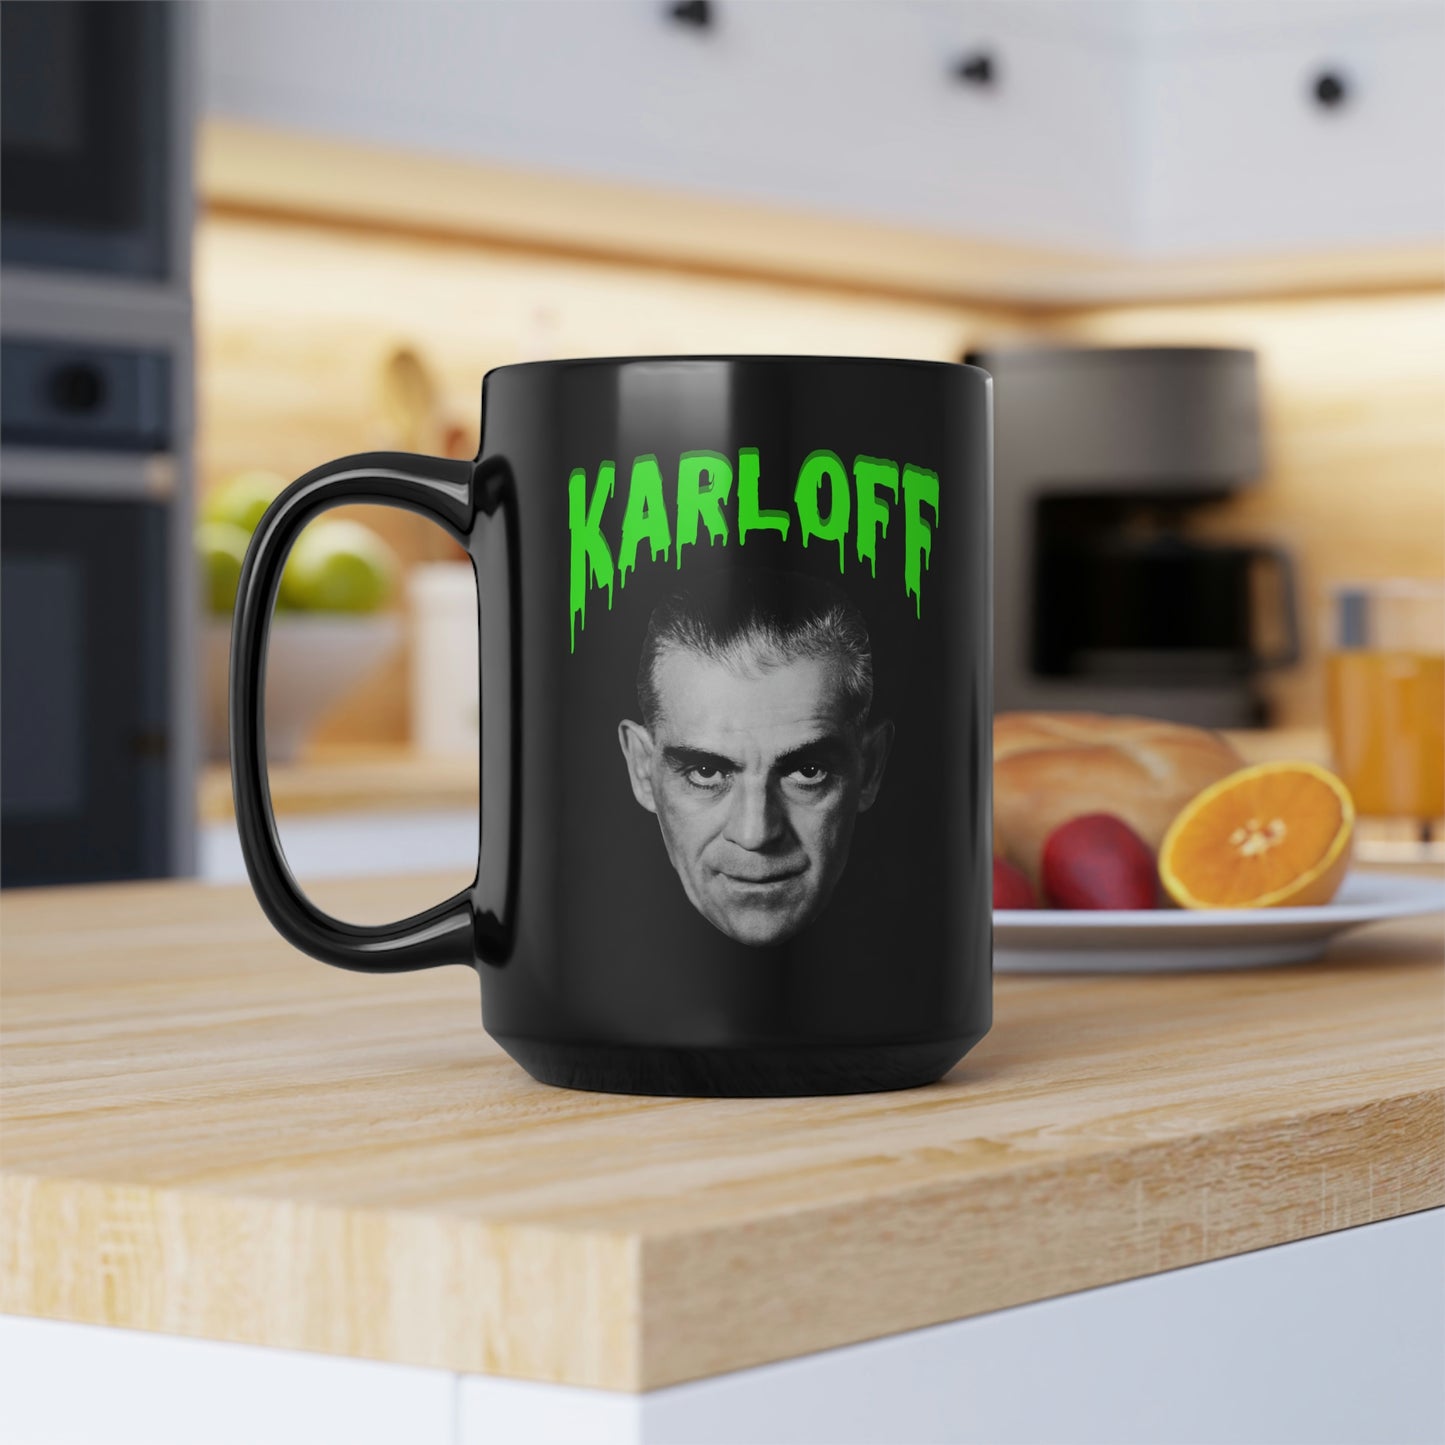 KARLOFF Black Mug, 15oz